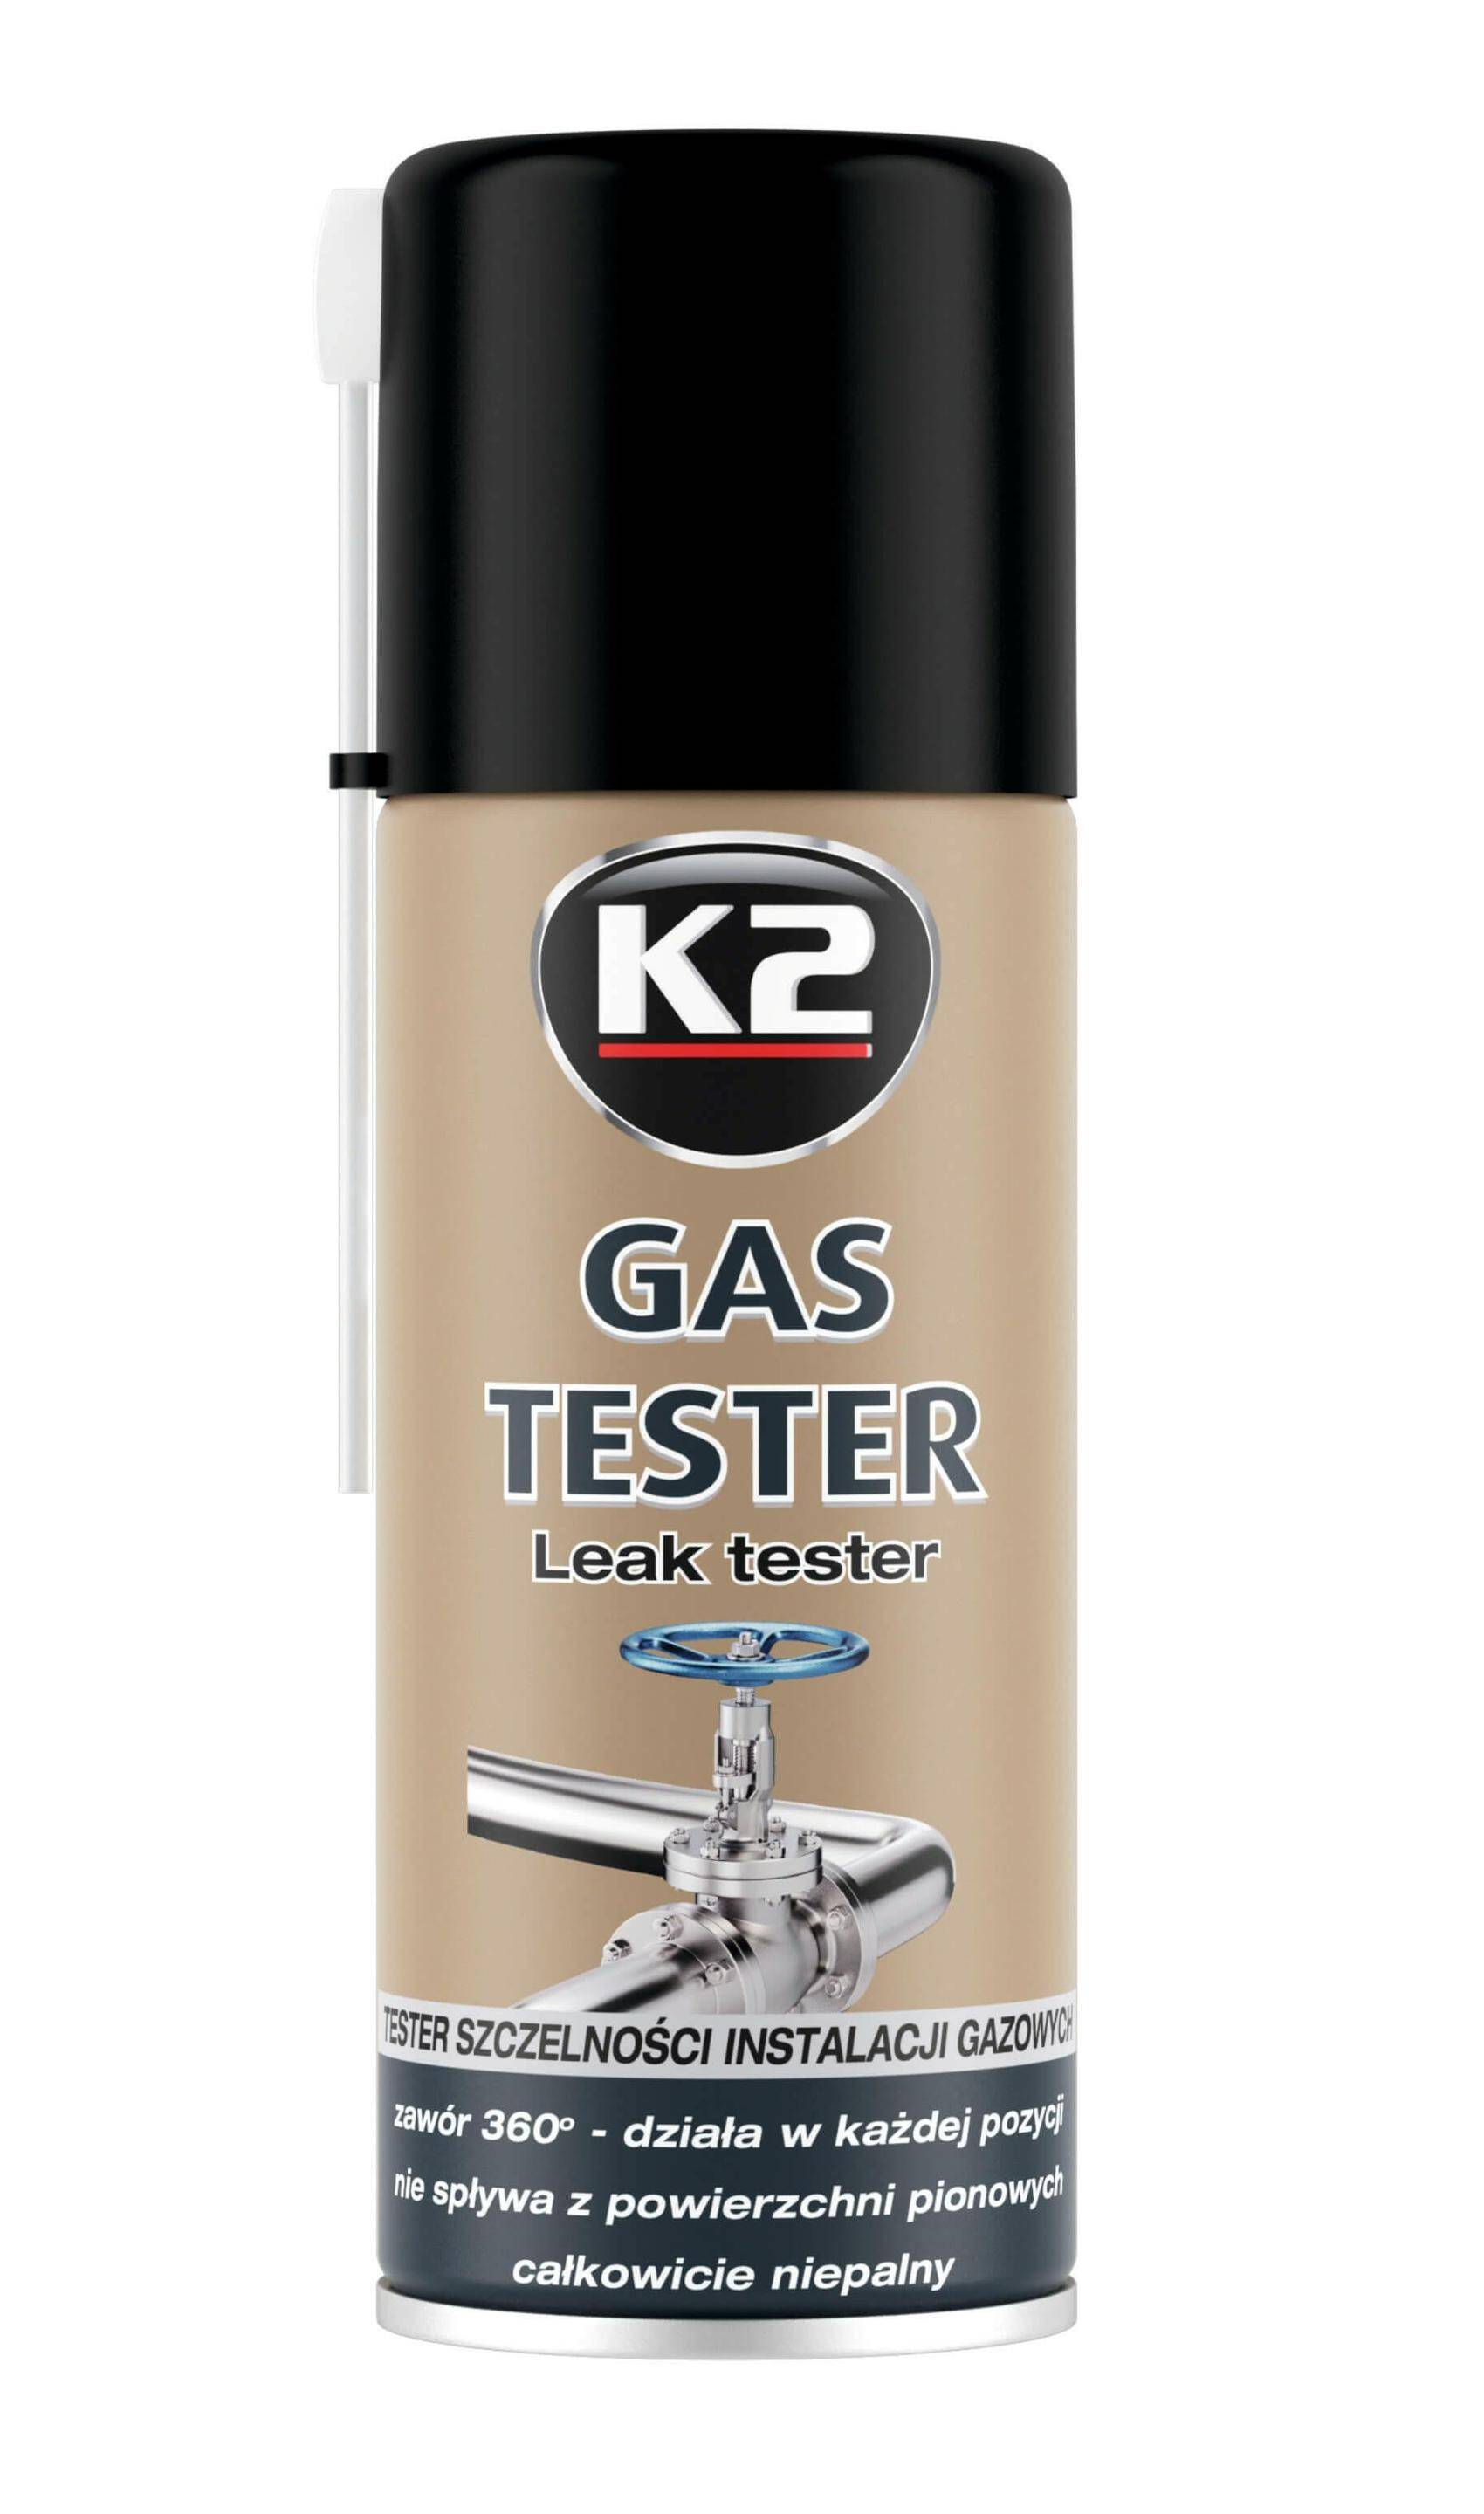 K2 GAS TESTER 400ml spay